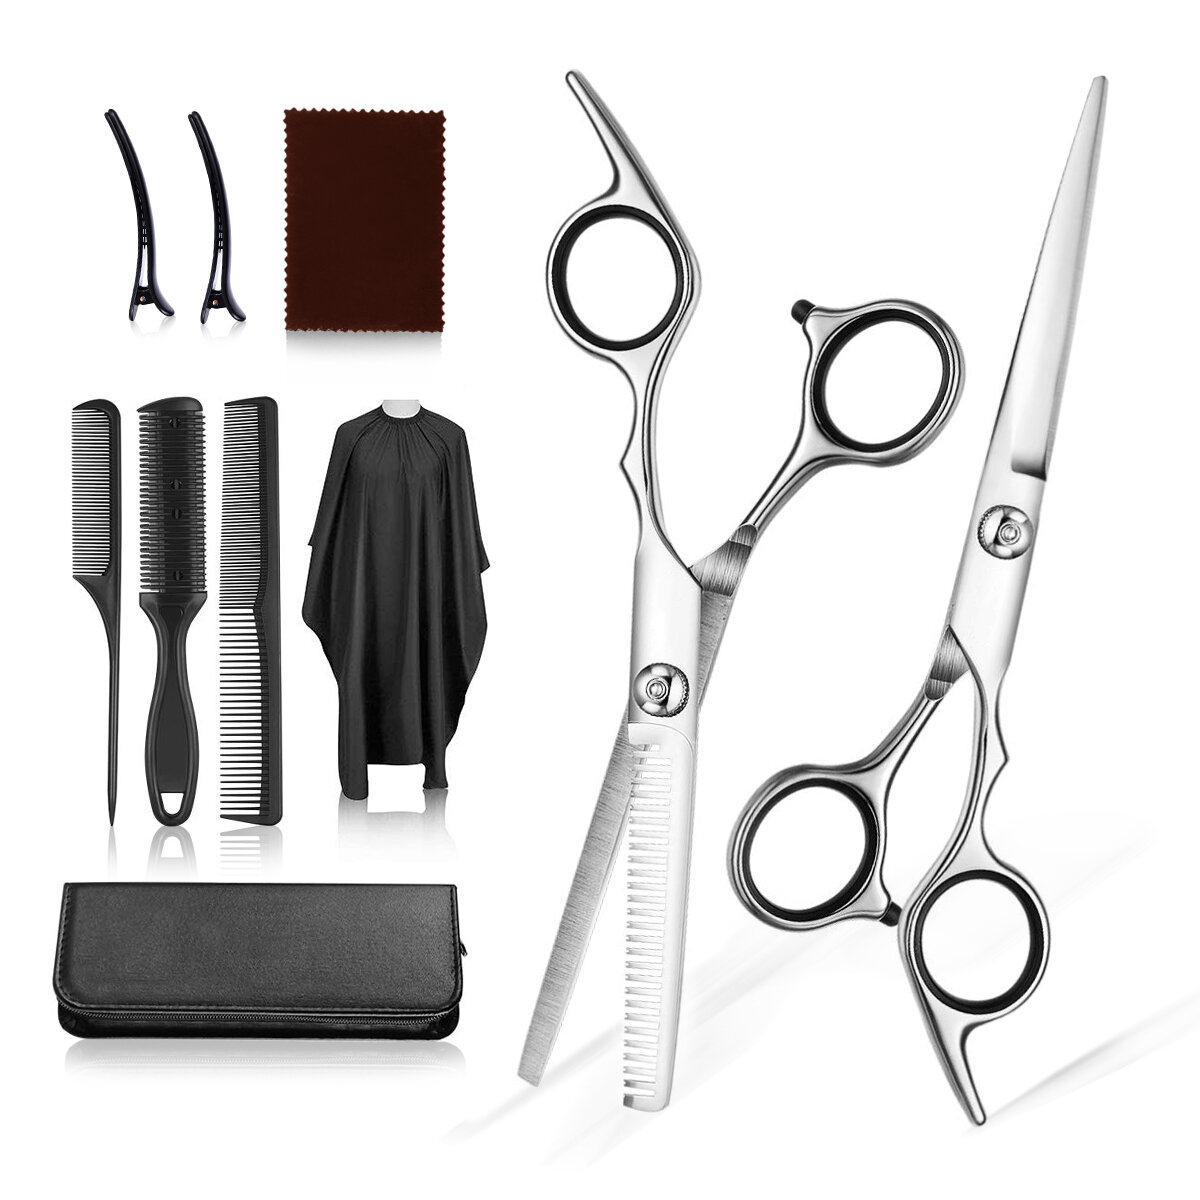 

10pcs Professional Hair Cutting Scissors Thinning Shears Set Hairdressing Salon Barber